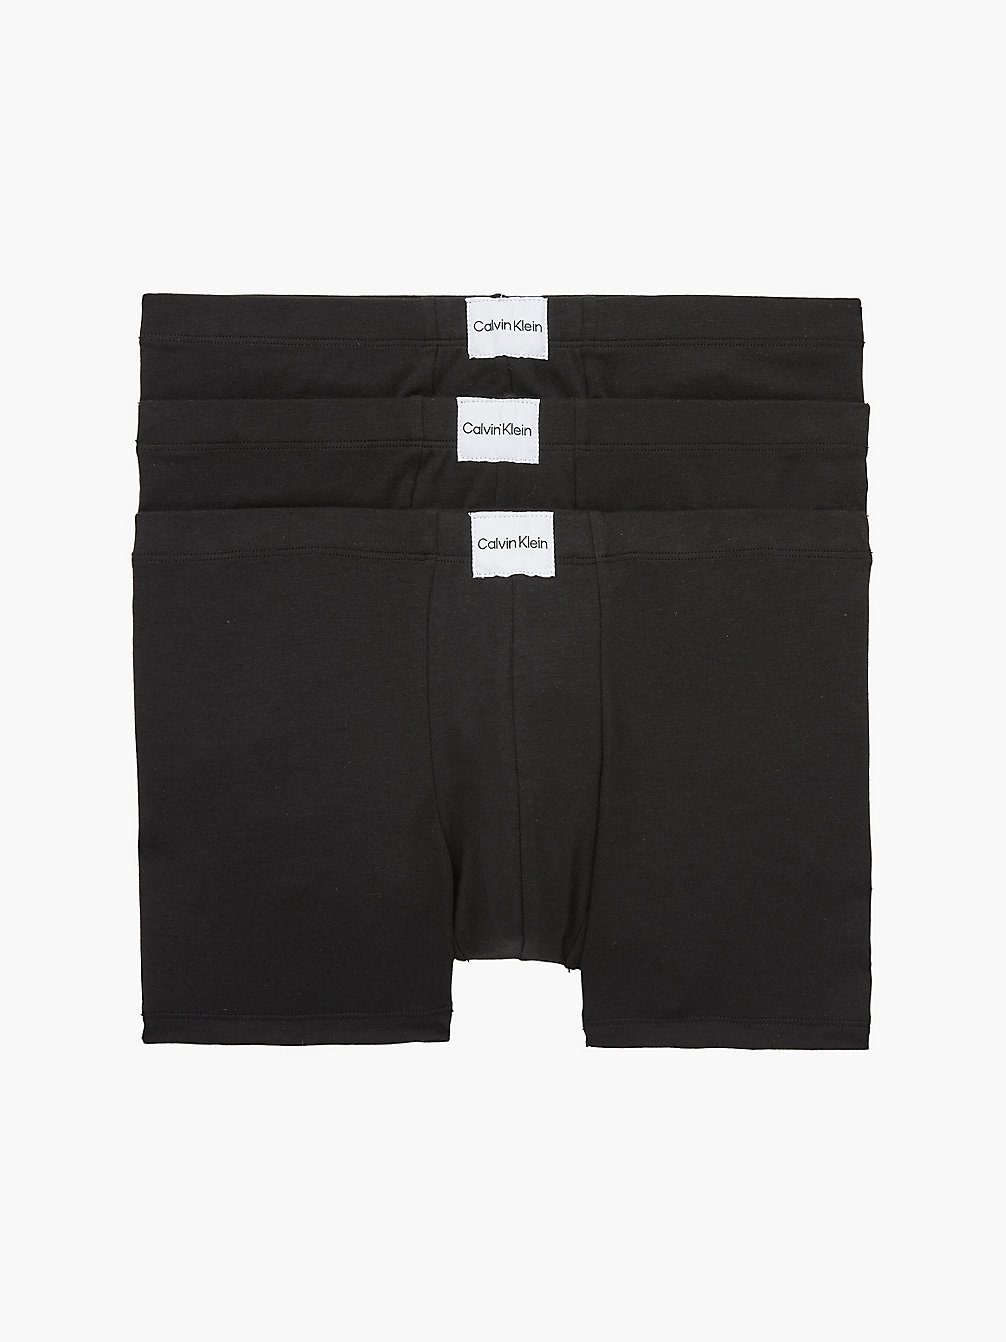 BLACK/ BLACK/ BLACK > Zestaw 3 Par Bokserek - Pure Cotton > undefined Mężczyźni - Calvin Klein